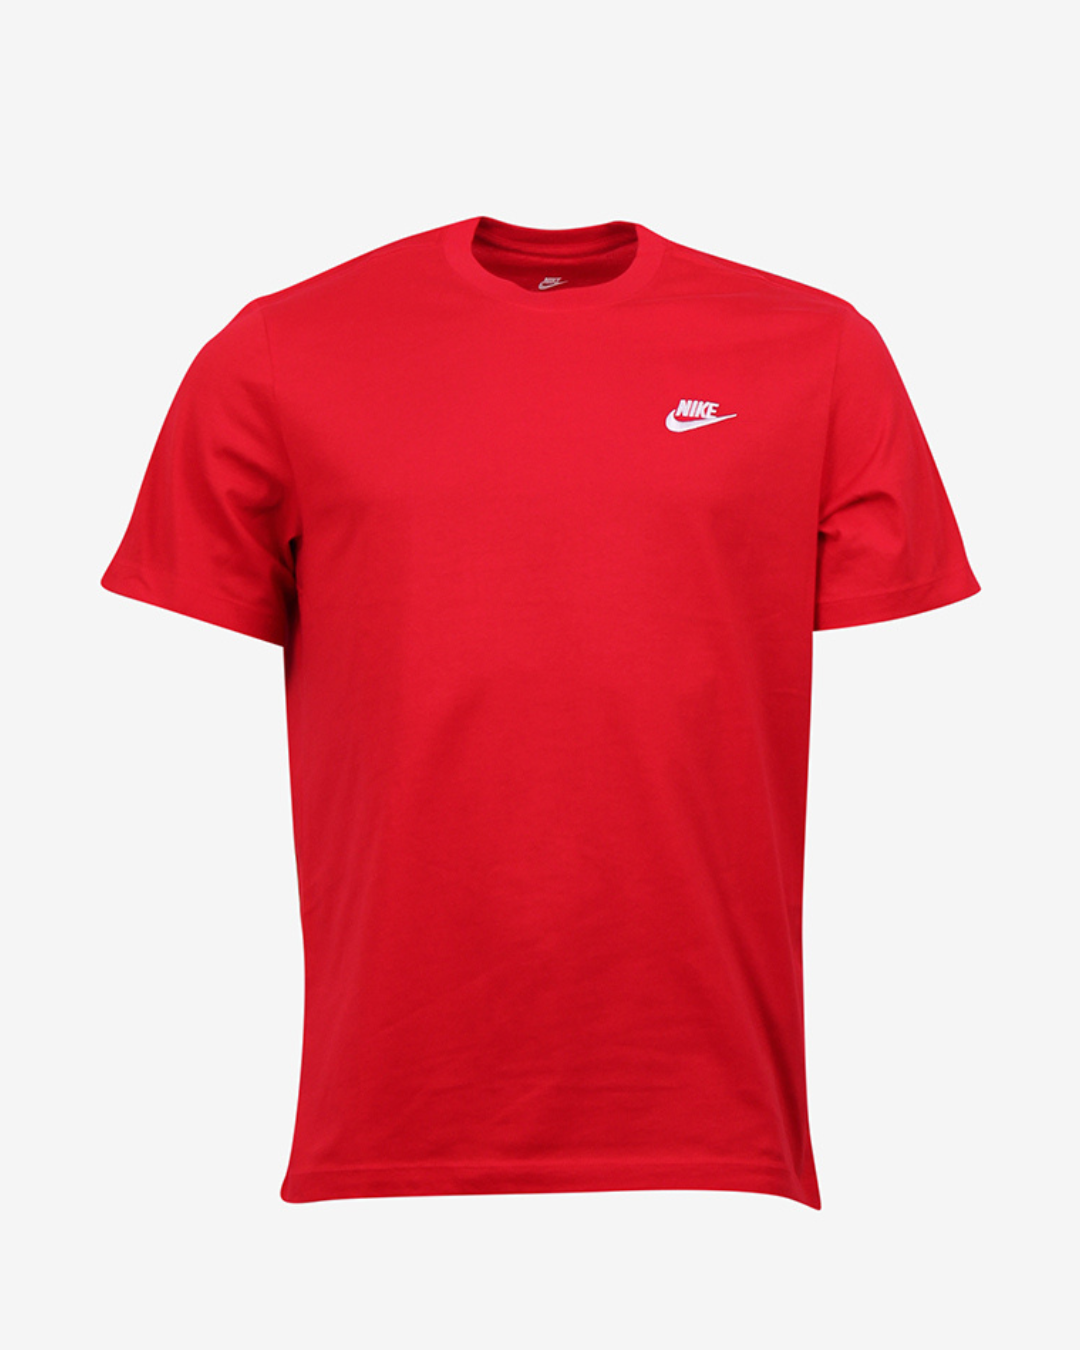 Nike Club t-shirt - Rød - Str. M - Modish.dk